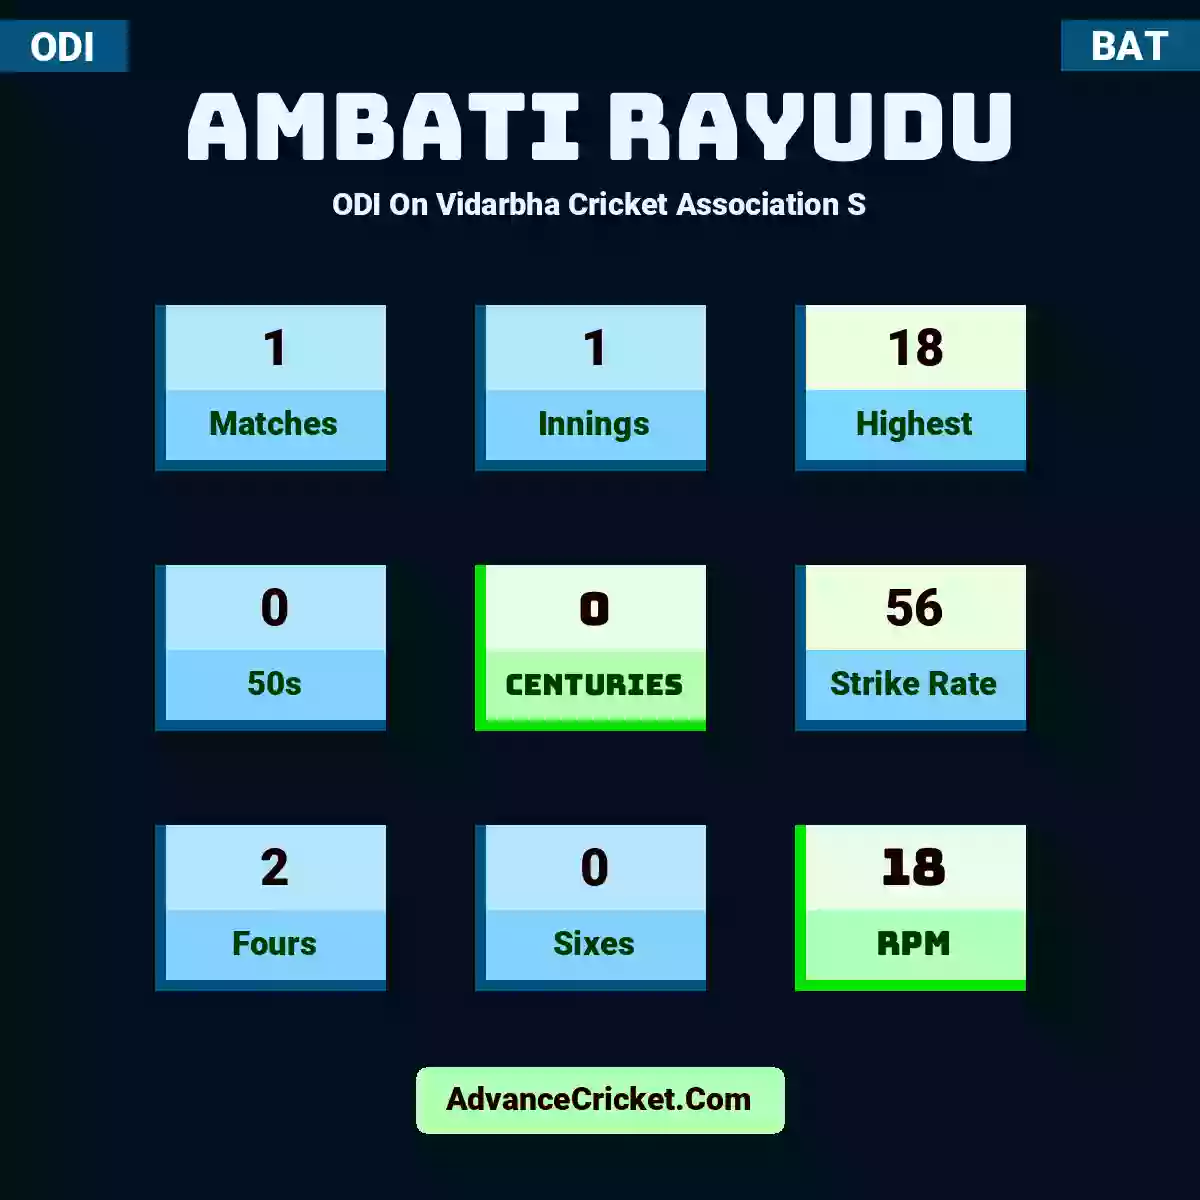 Ambati Rayudu ODI  On Vidarbha Cricket Association S, Ambati Rayudu played 1 matches, scored 18 runs as highest, 0 half-centuries, and 0 centuries, with a strike rate of 56. A.Rayudu hit 2 fours and 0 sixes, with an RPM of 18.